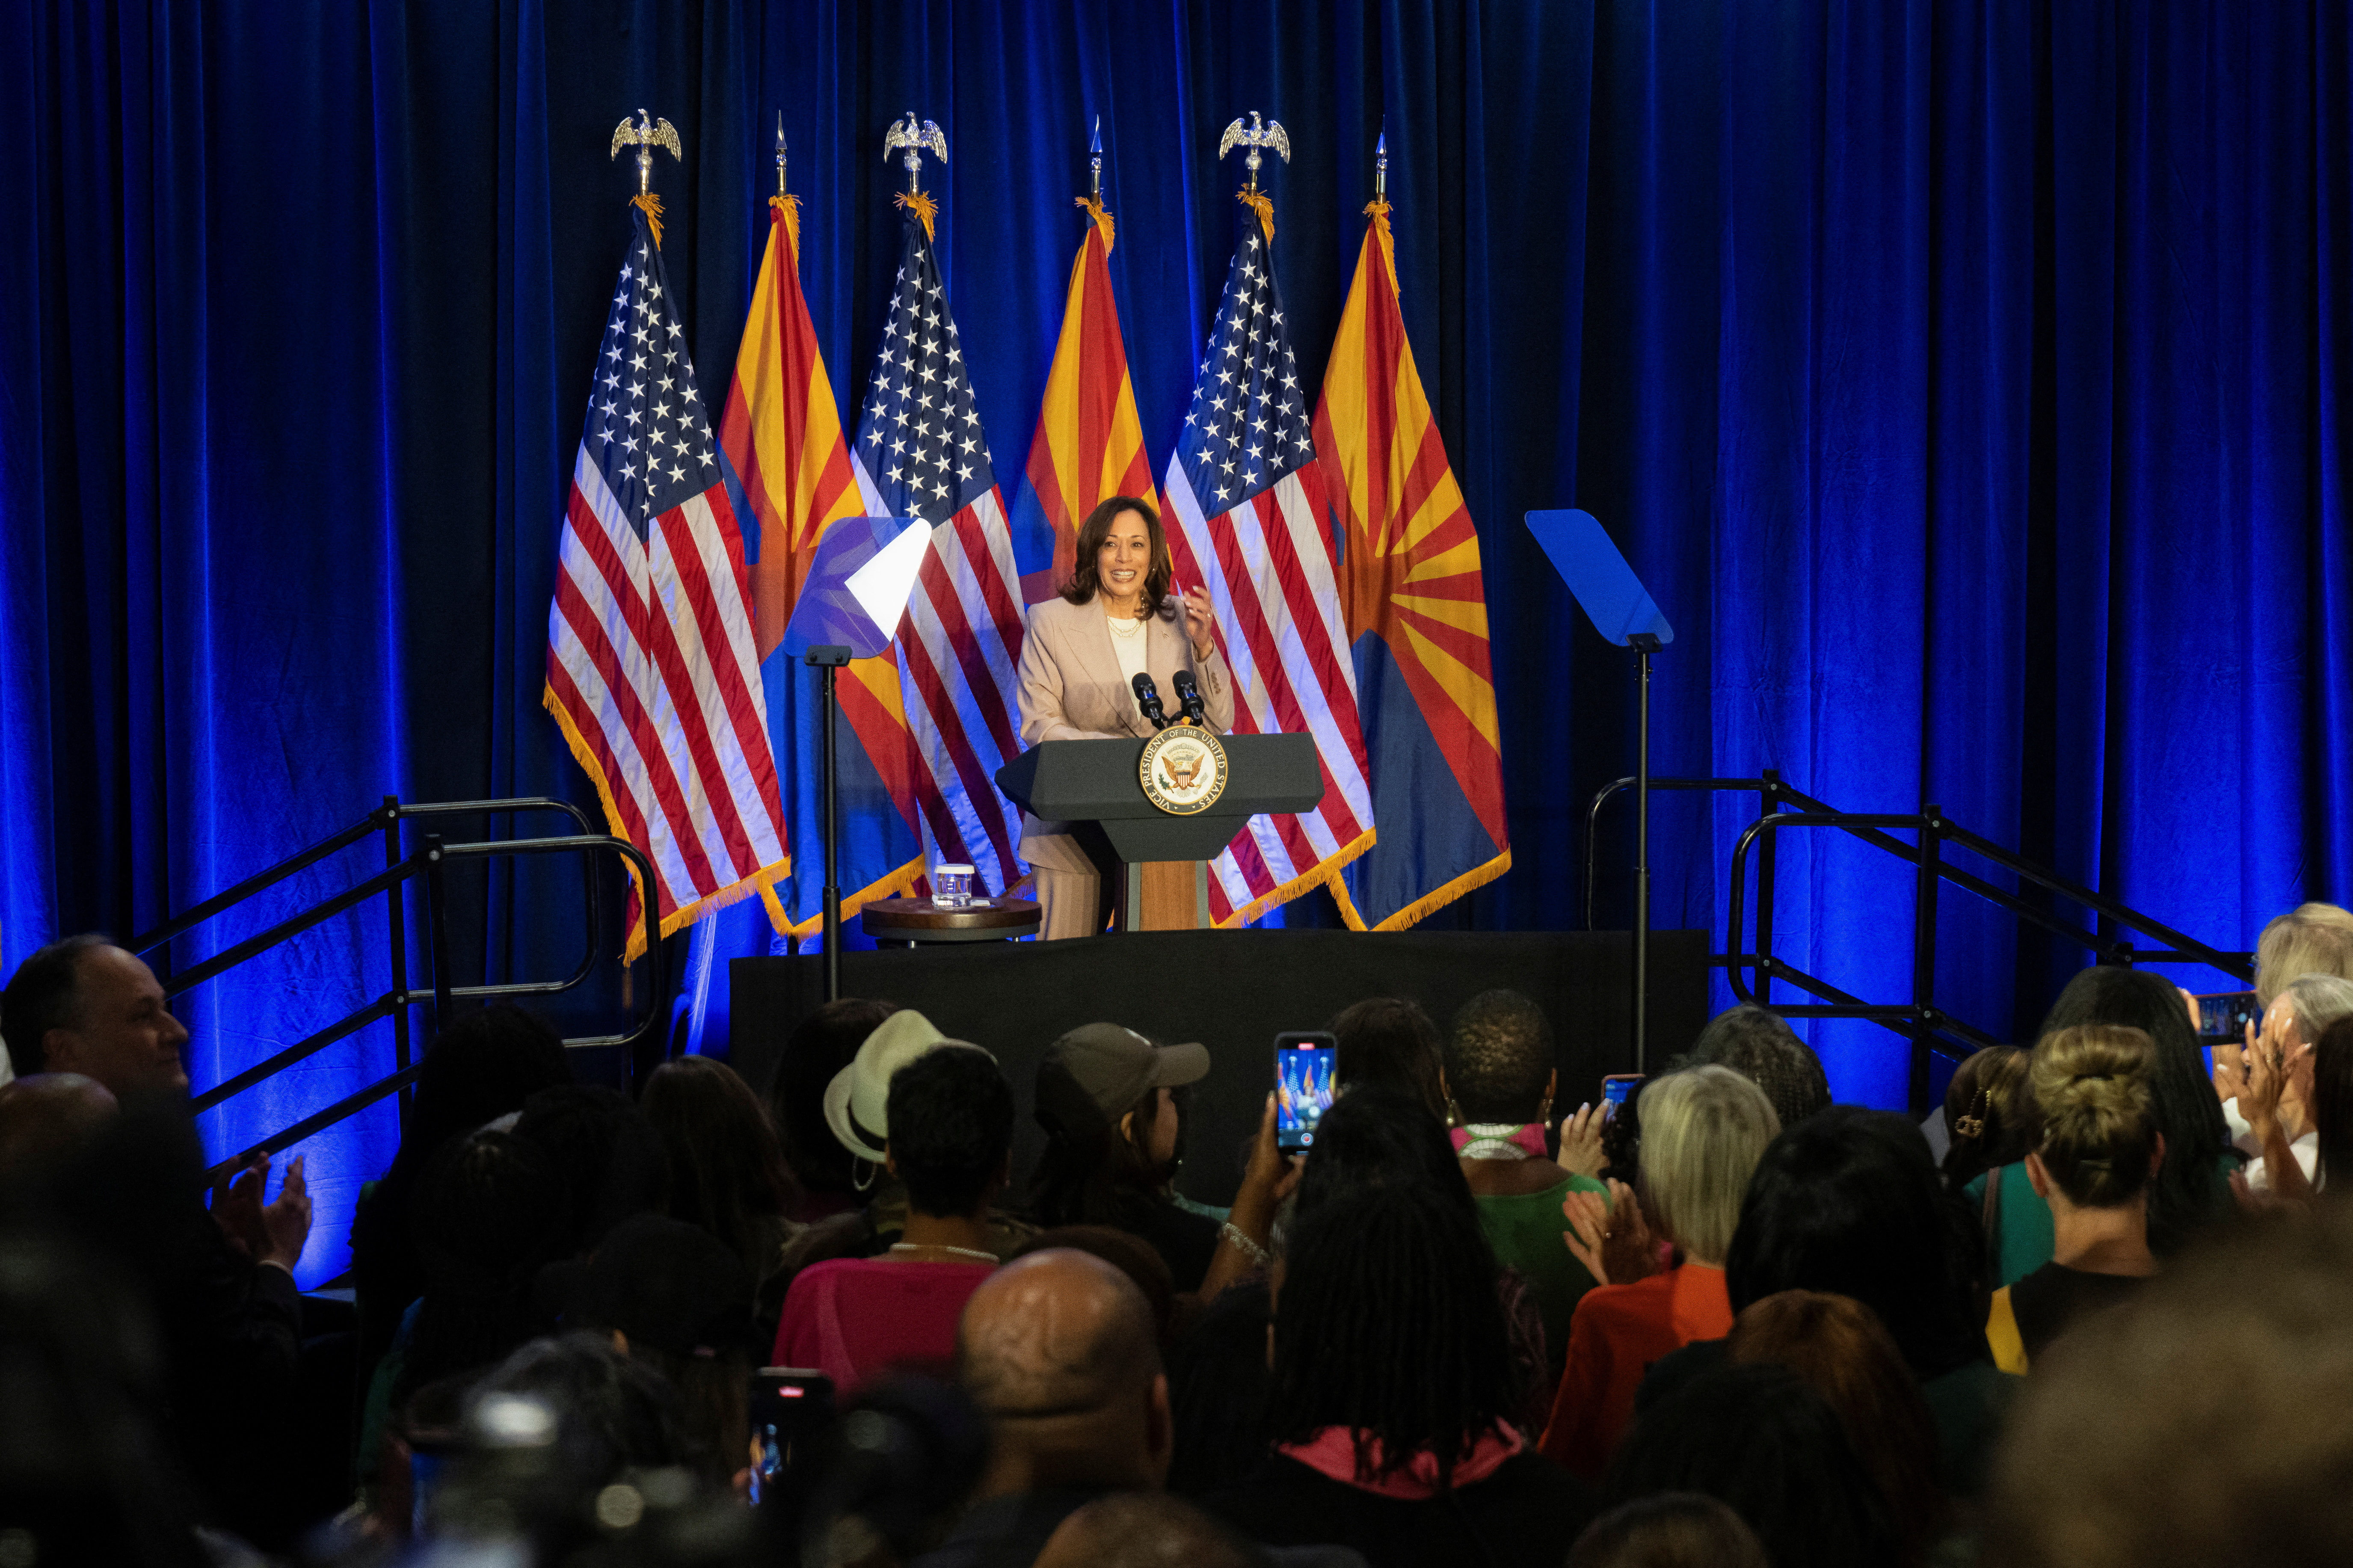 Harris travels to Arizona in wake of abortion ruling